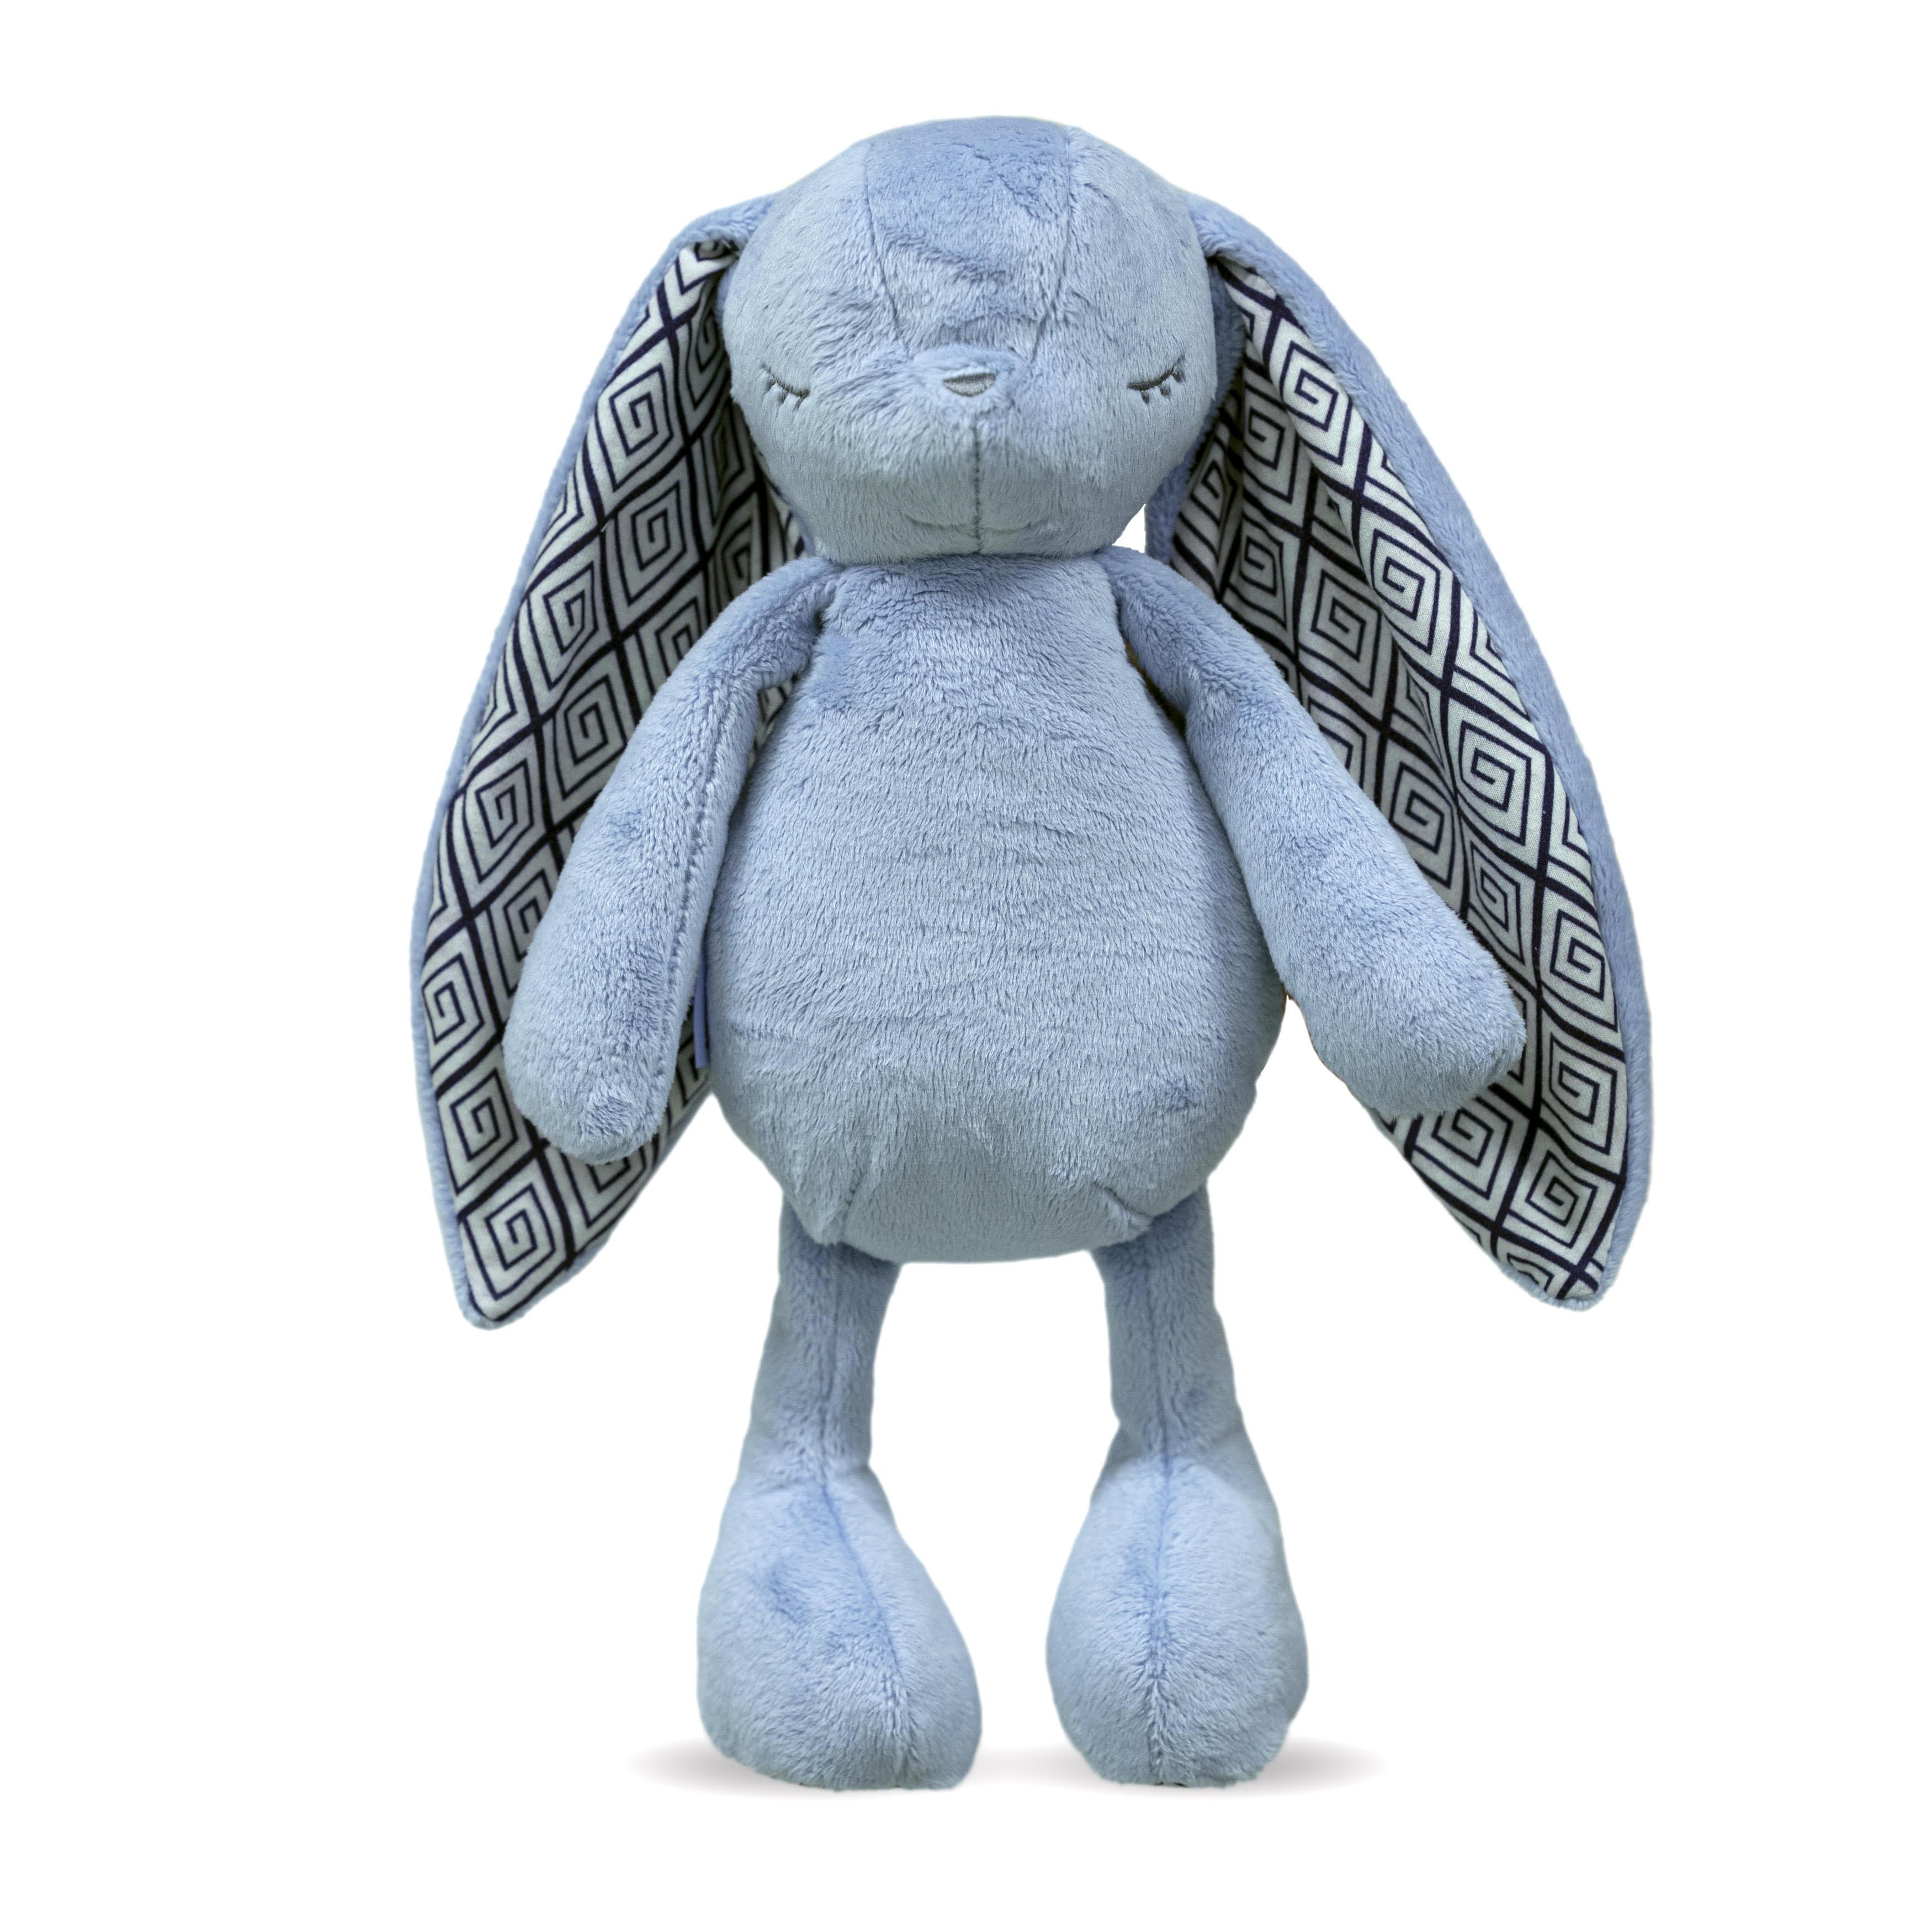 Noisy plush Diddou teddy bear (with star projector) - blue